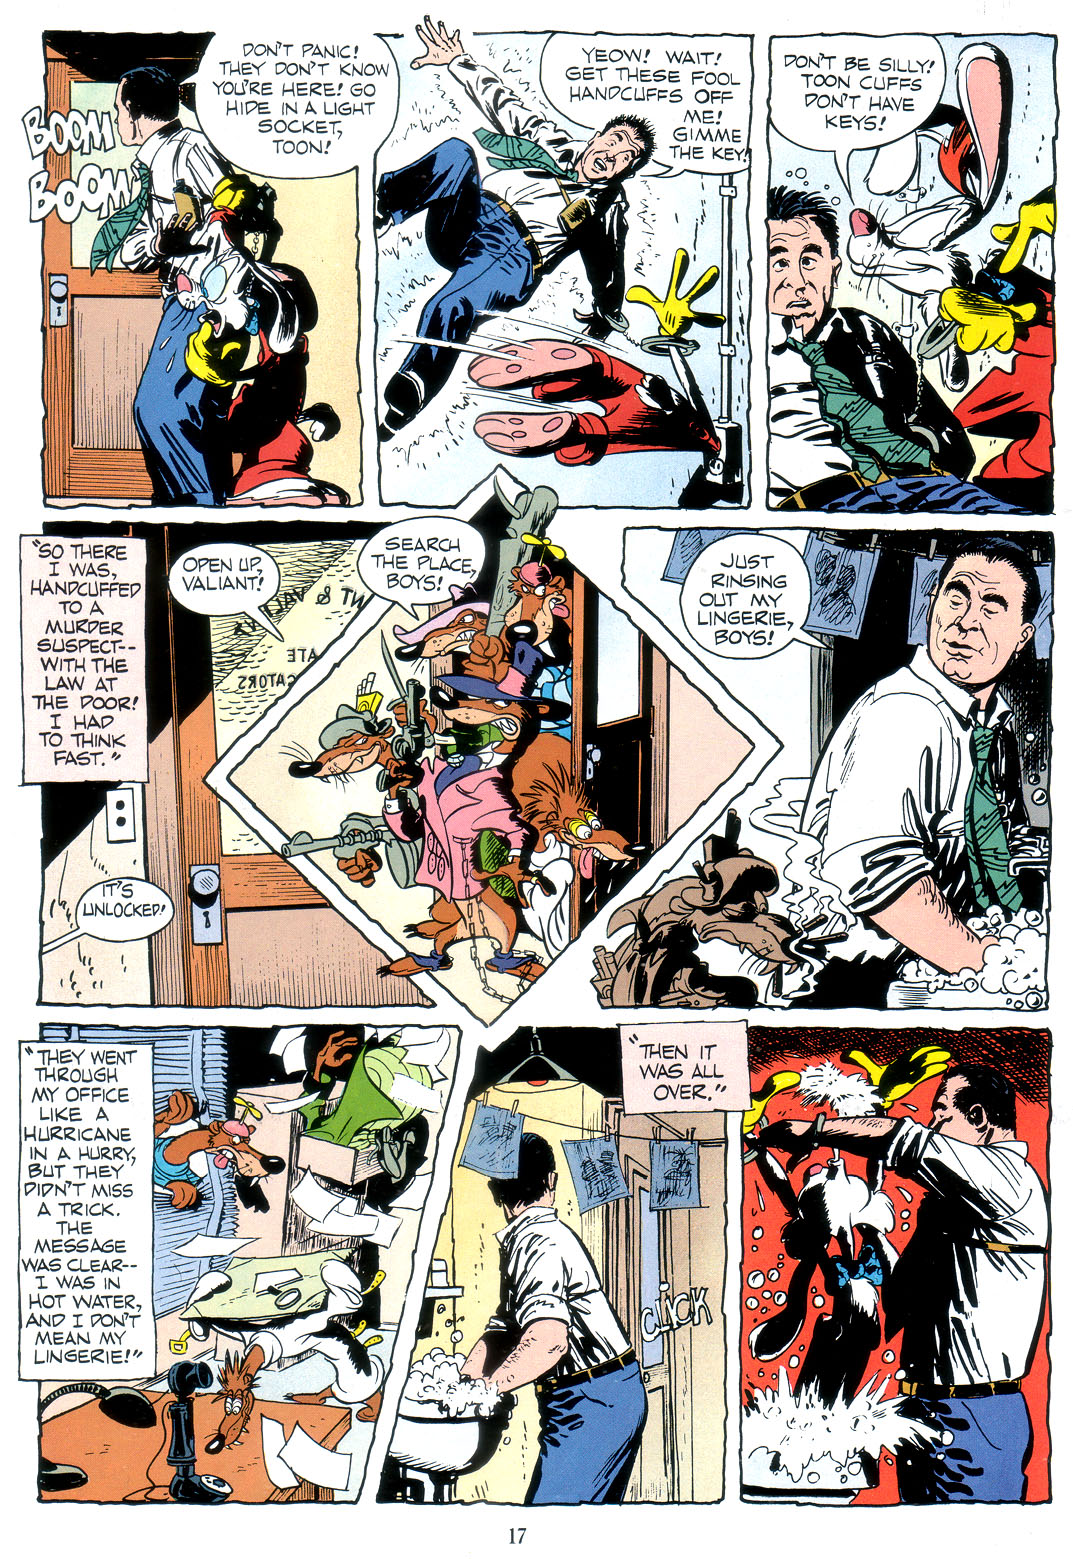 Marvel Graphic Novel issue 41 - Who Framed Roger Rabbit - Page 19